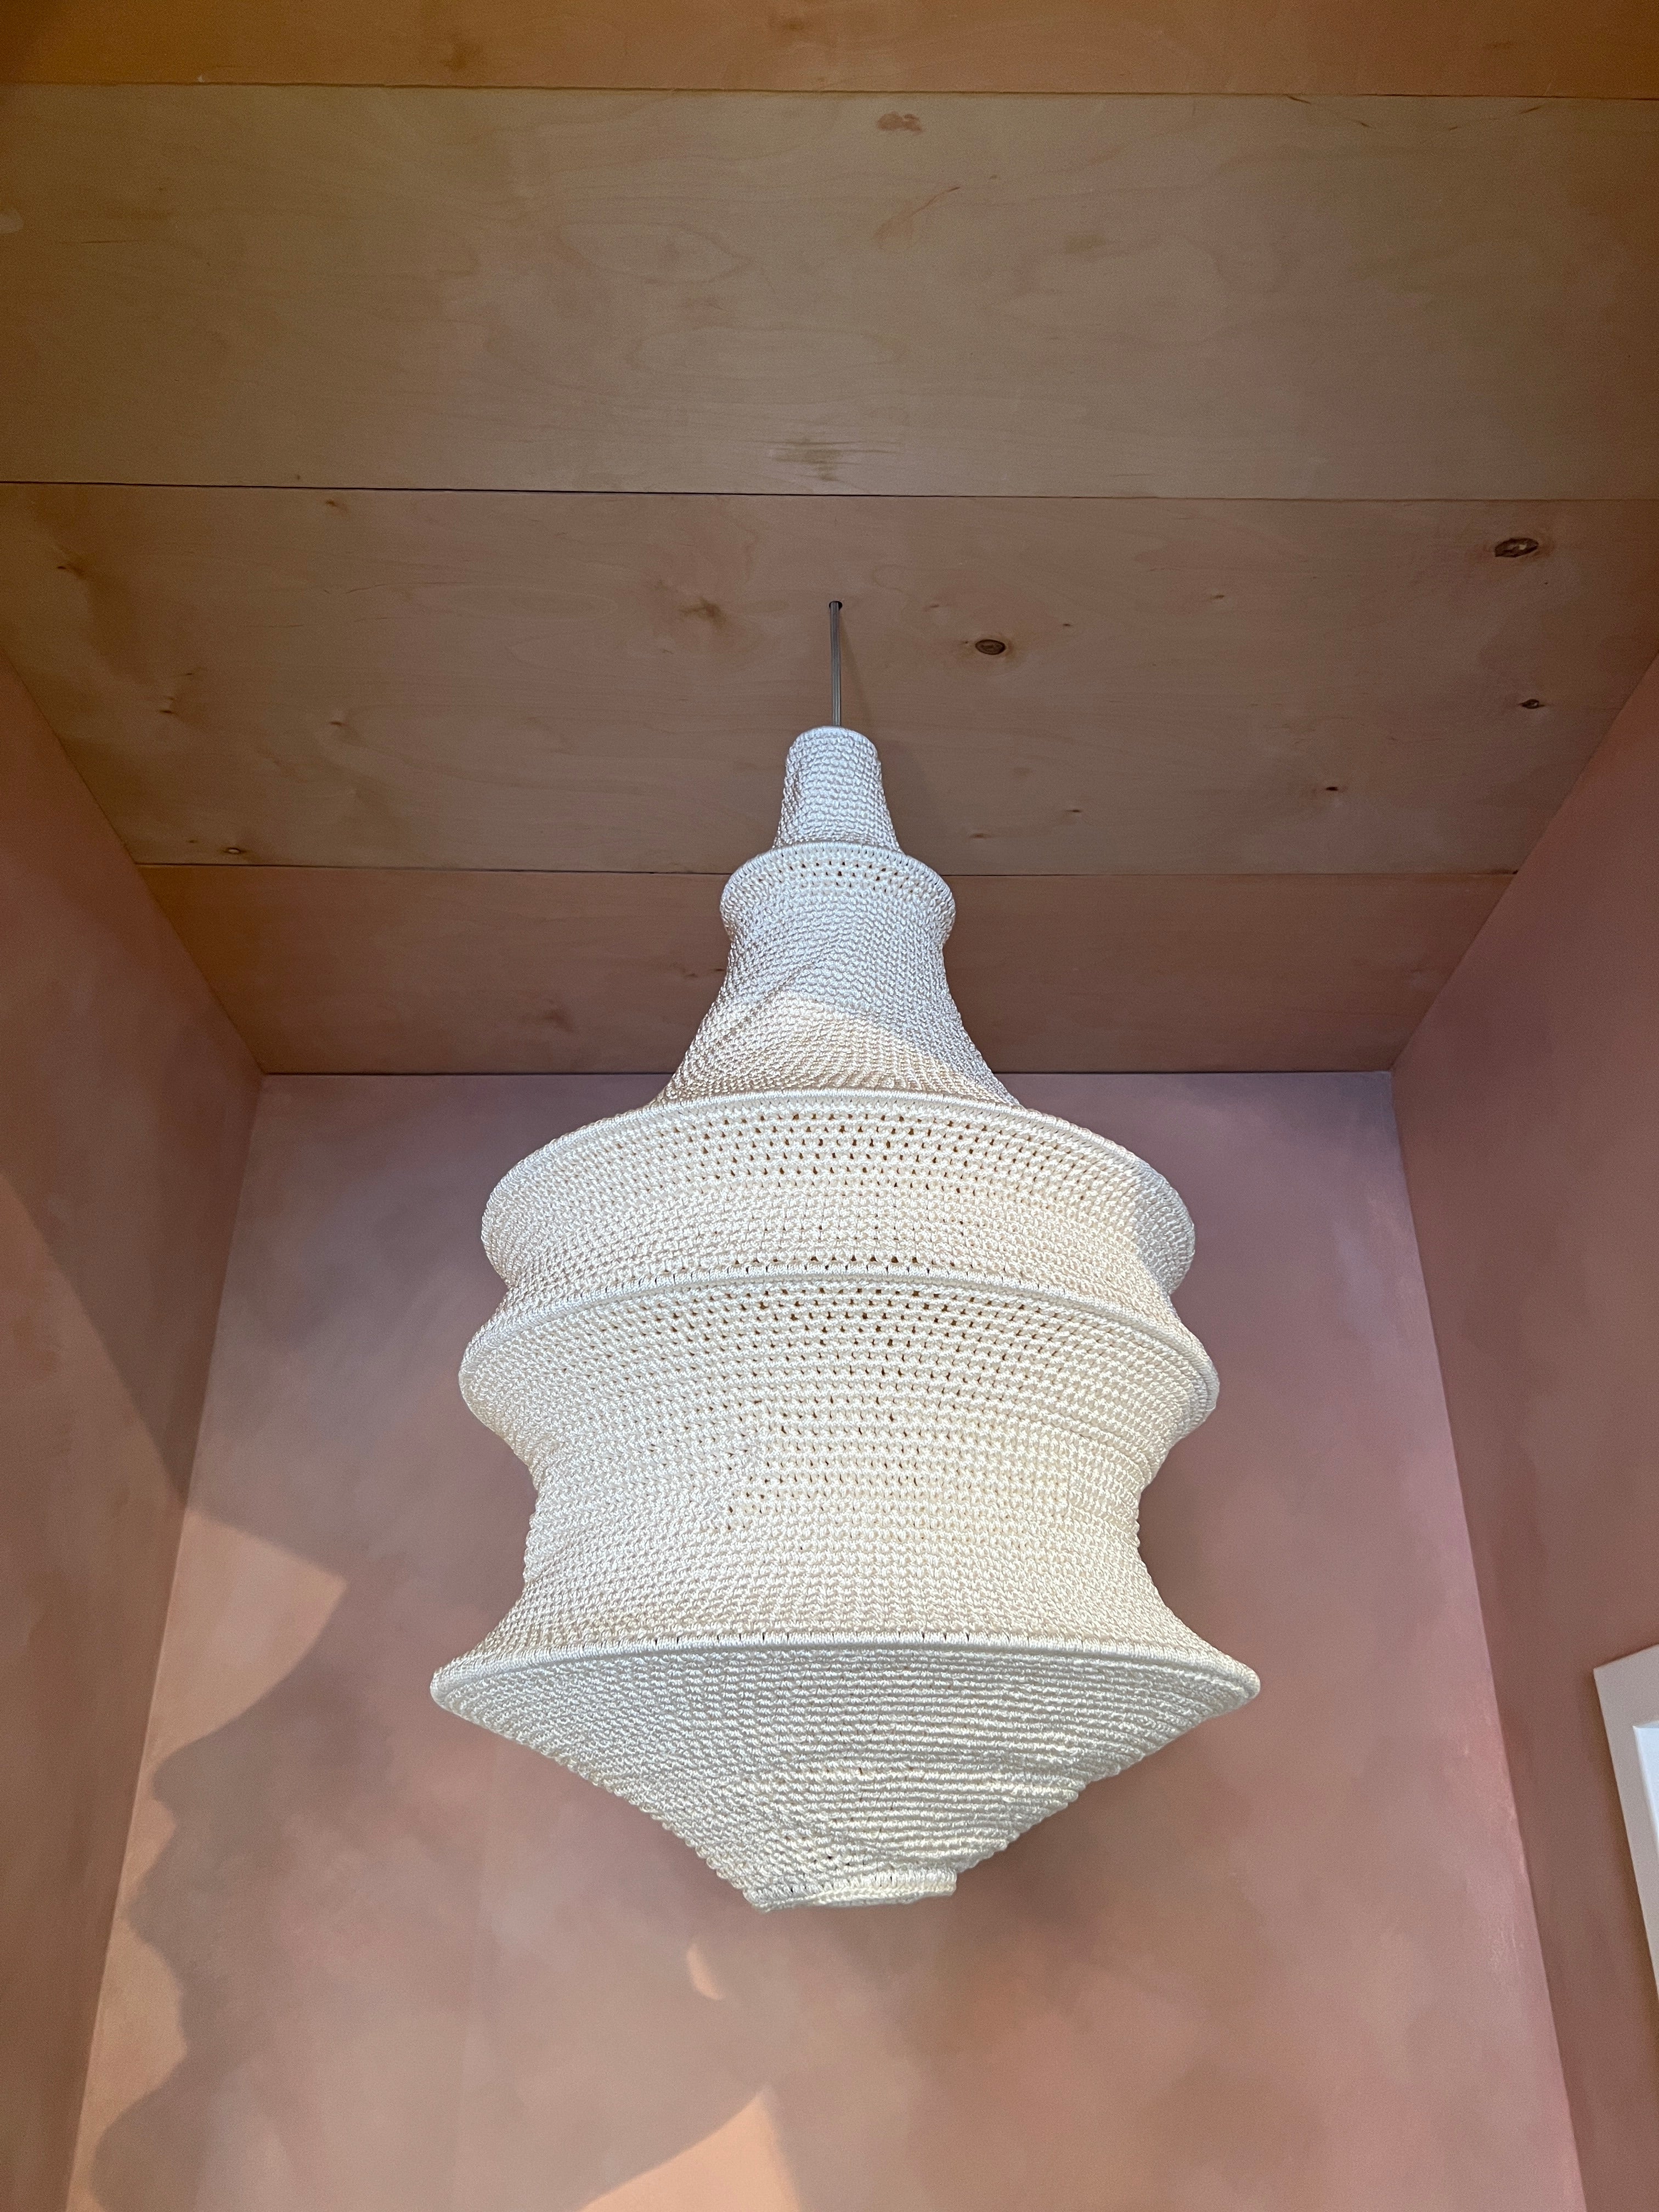 Saint IV Crochet Pendant Lamp